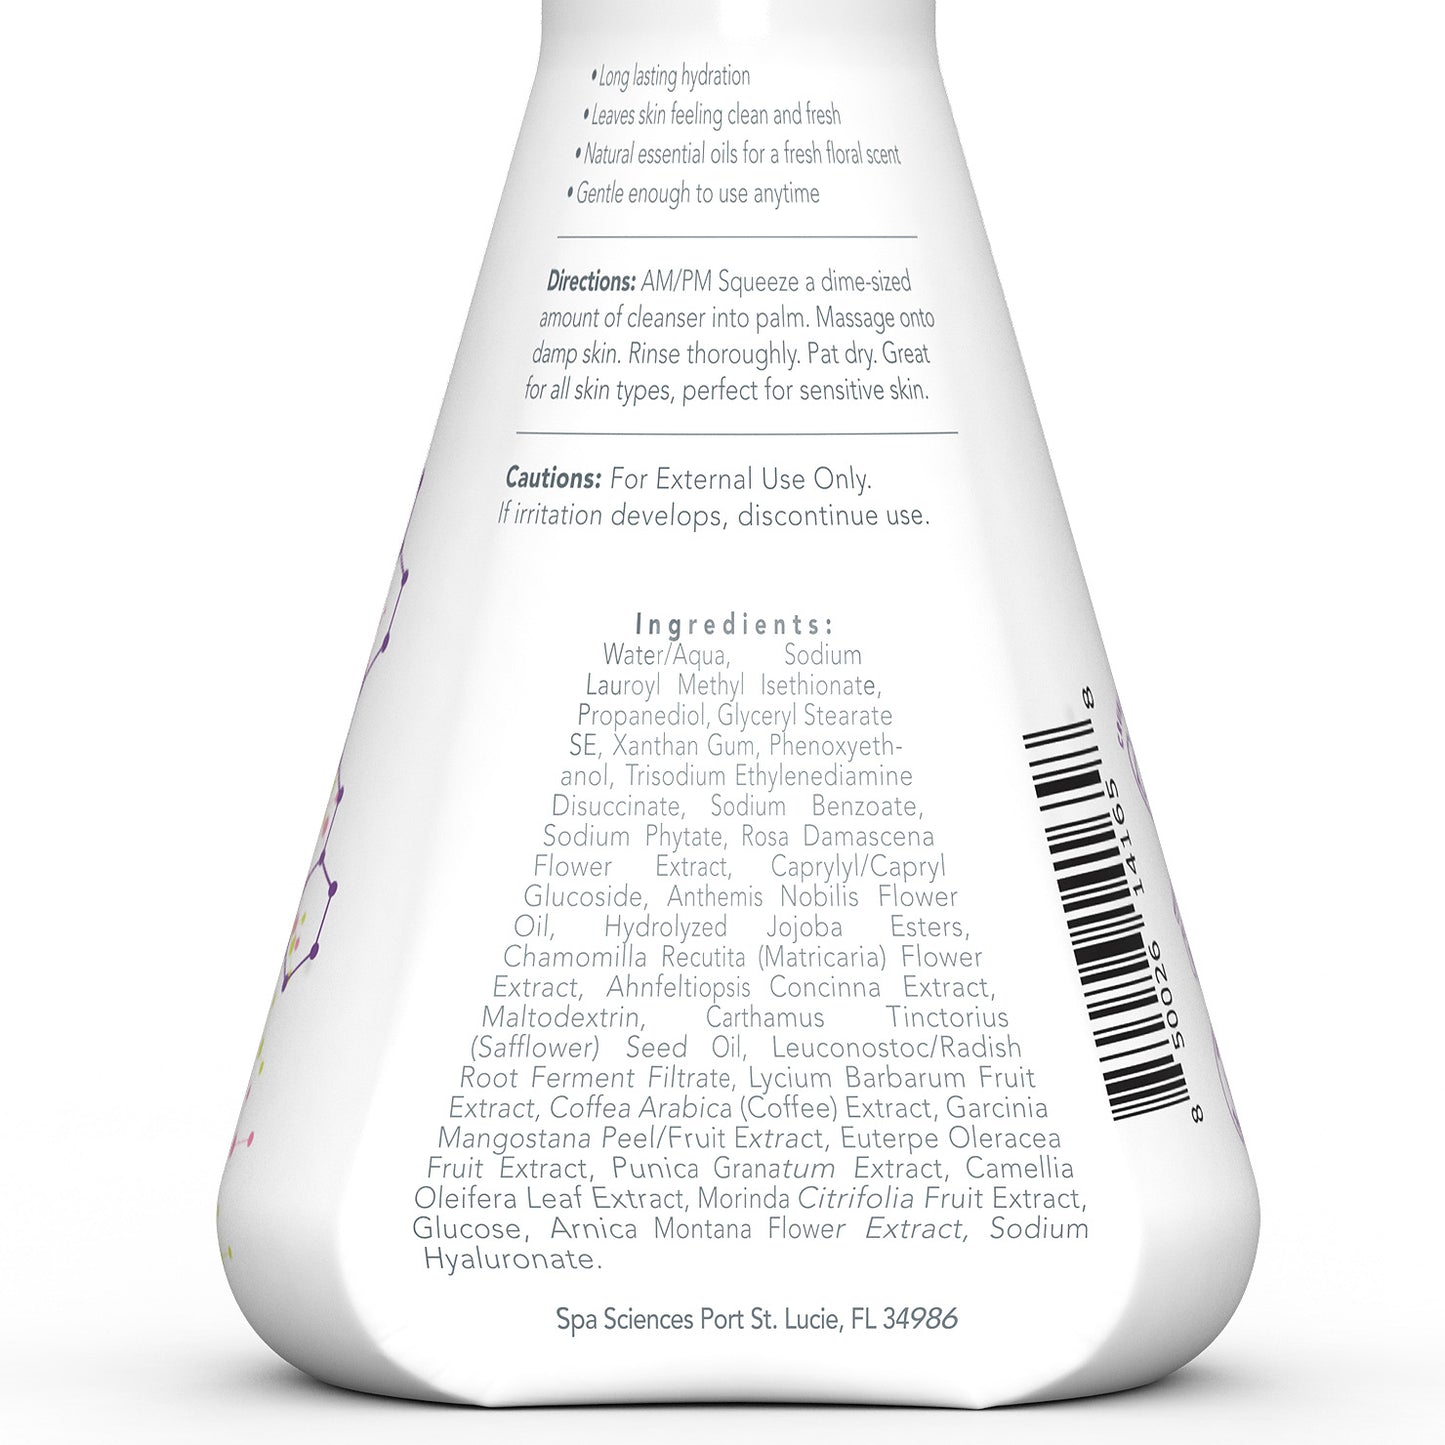 A bottle with a label on it for Spa Sciences' Acne Attack Bundle description.